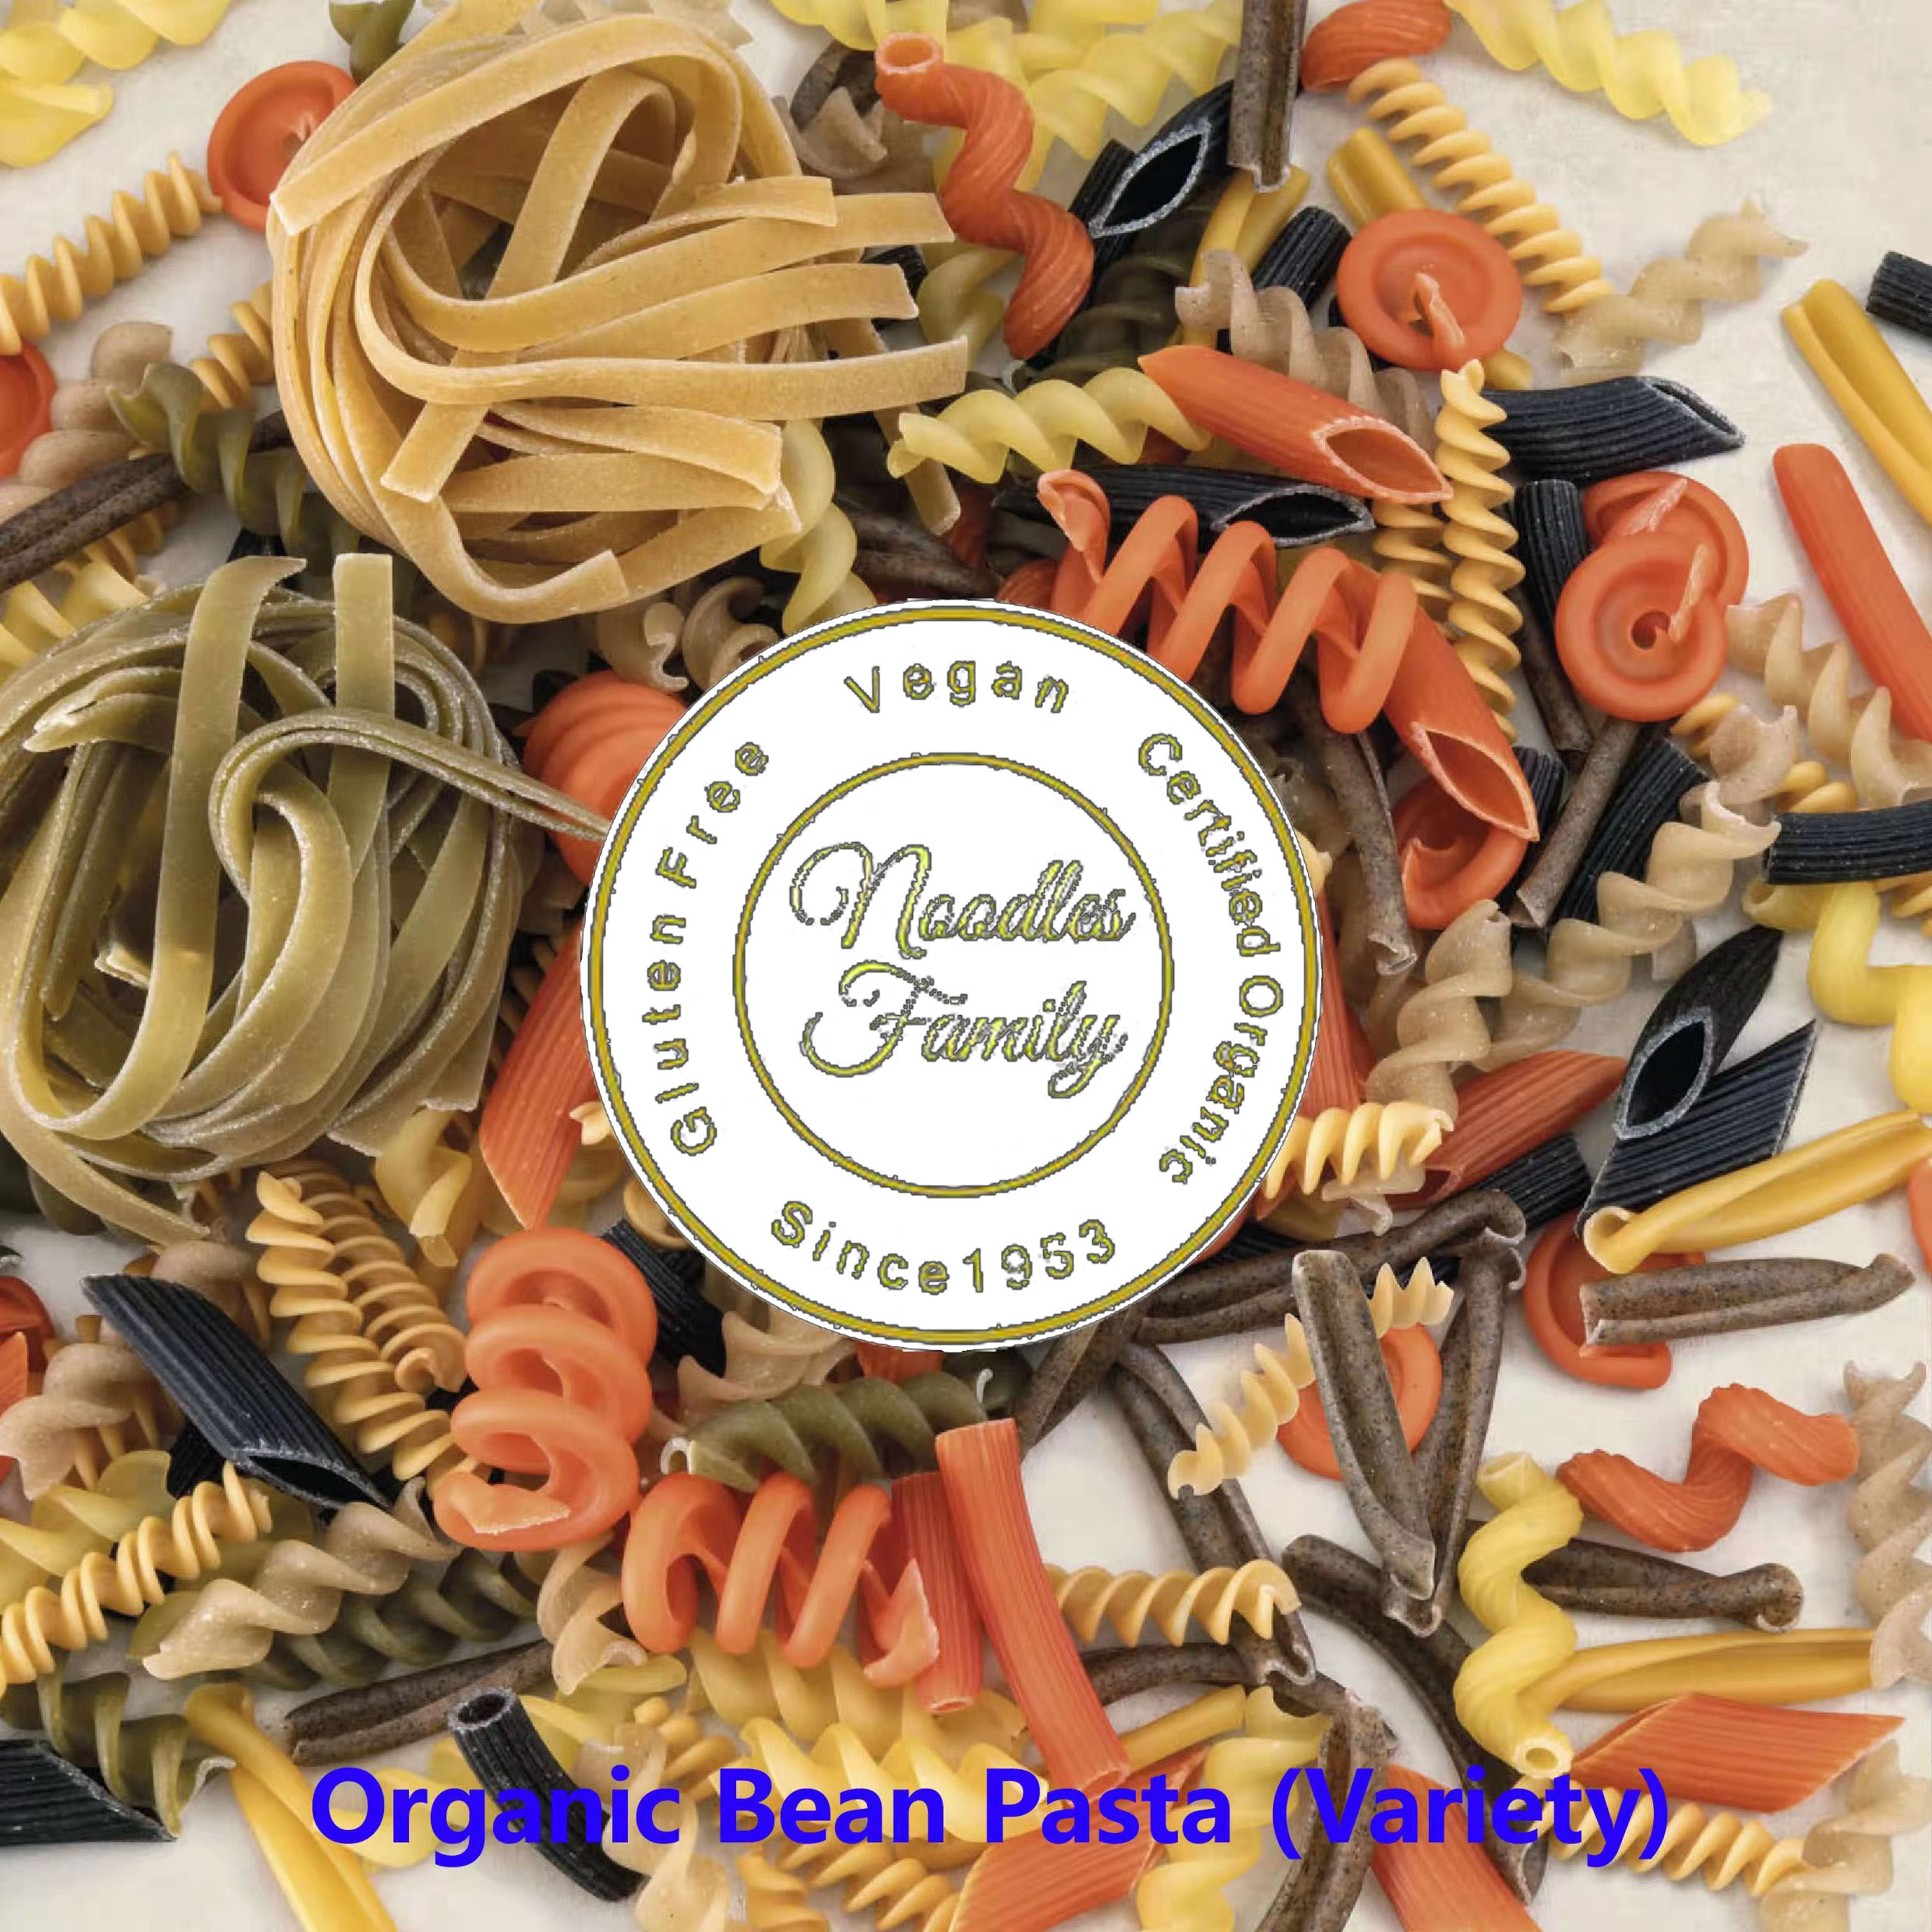 Organic Bean Pasta(variety)